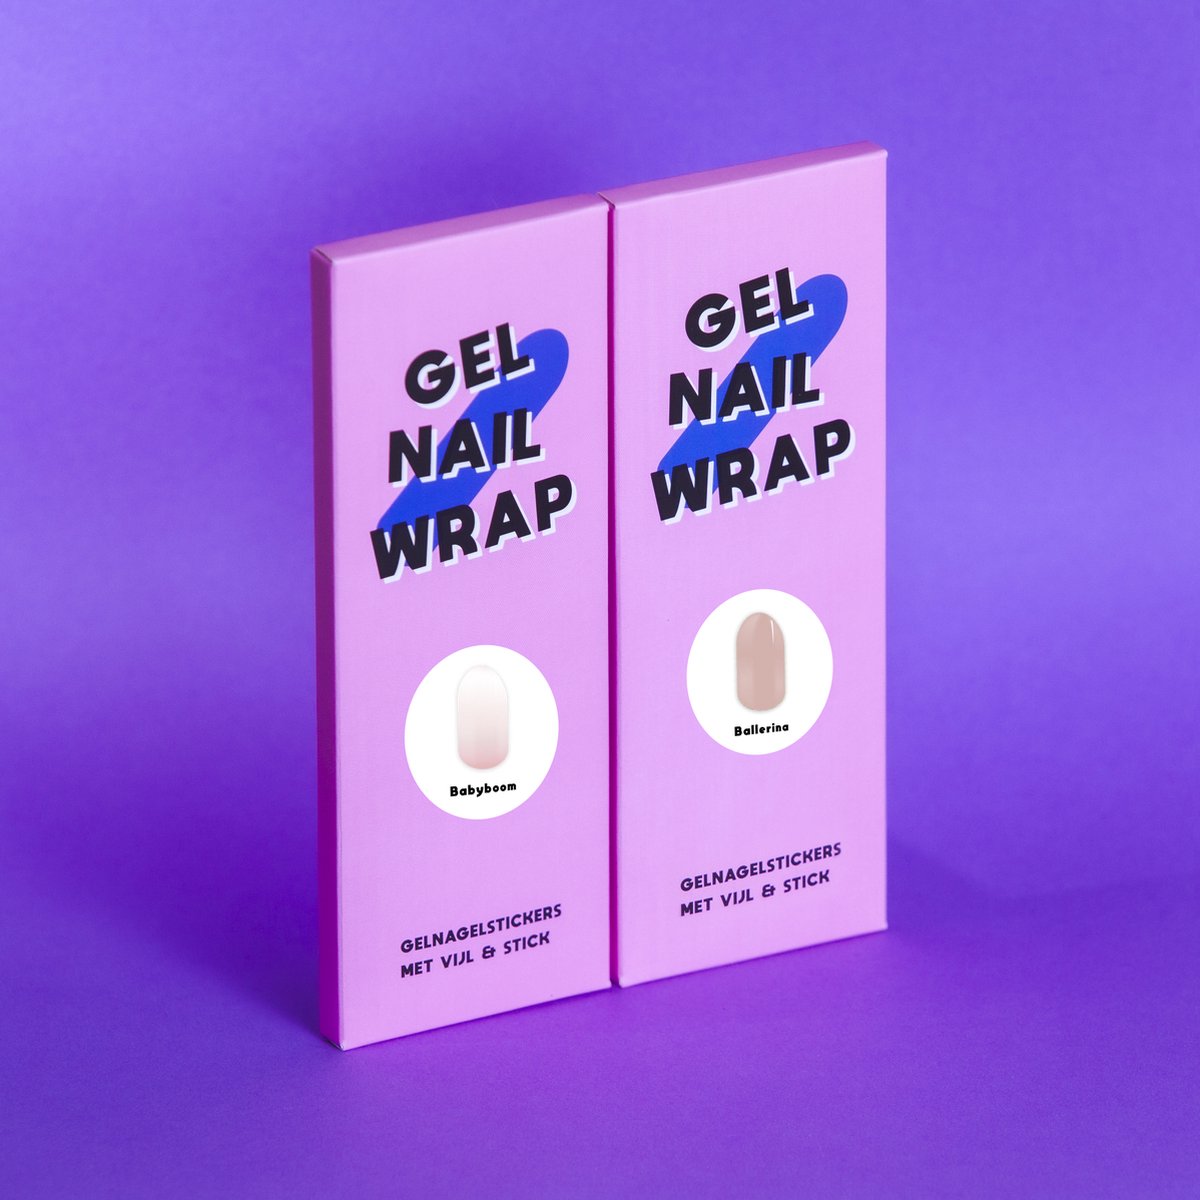 Gel Nail Wrap value pack - 2 x 20 nail wraps - nagel wrap - nail wrap - UV Lamp Gelnagels - nagelstickers velletjes - Kleur: Babyboom & Ballerina